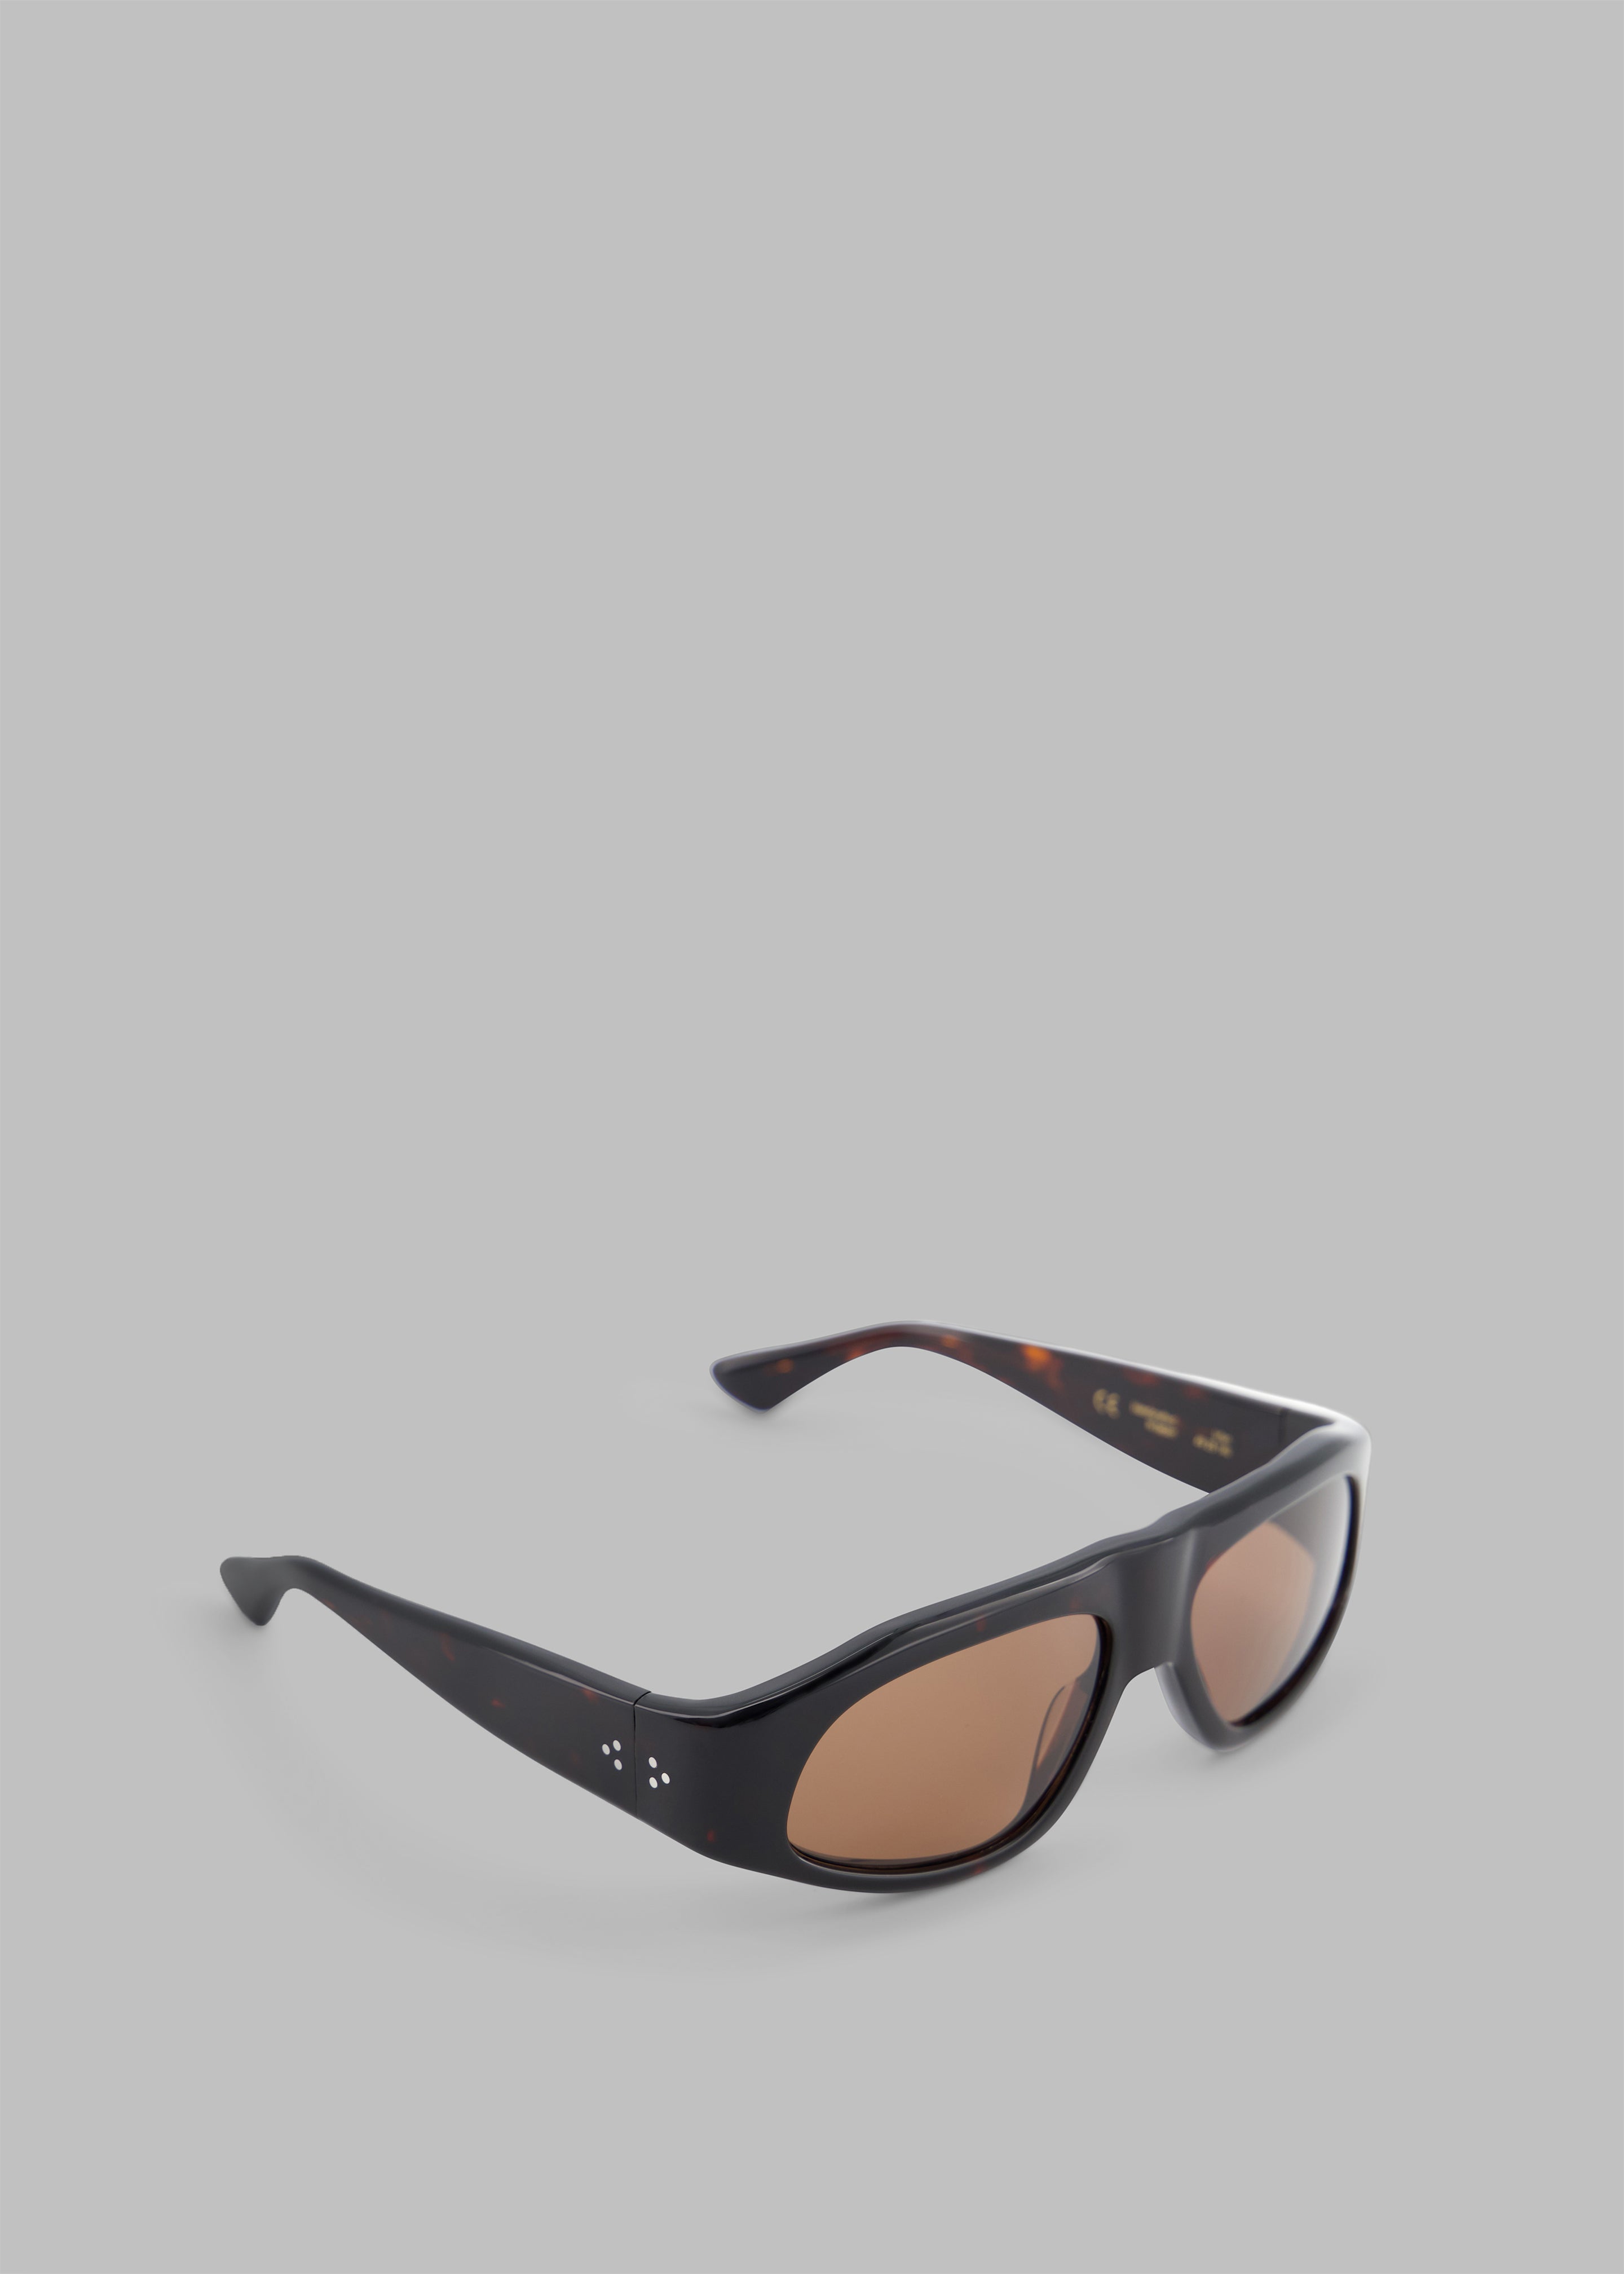 Port Tanger Irfan Sunglasses - Myrrh Acetate/Tobacco Lens - 4